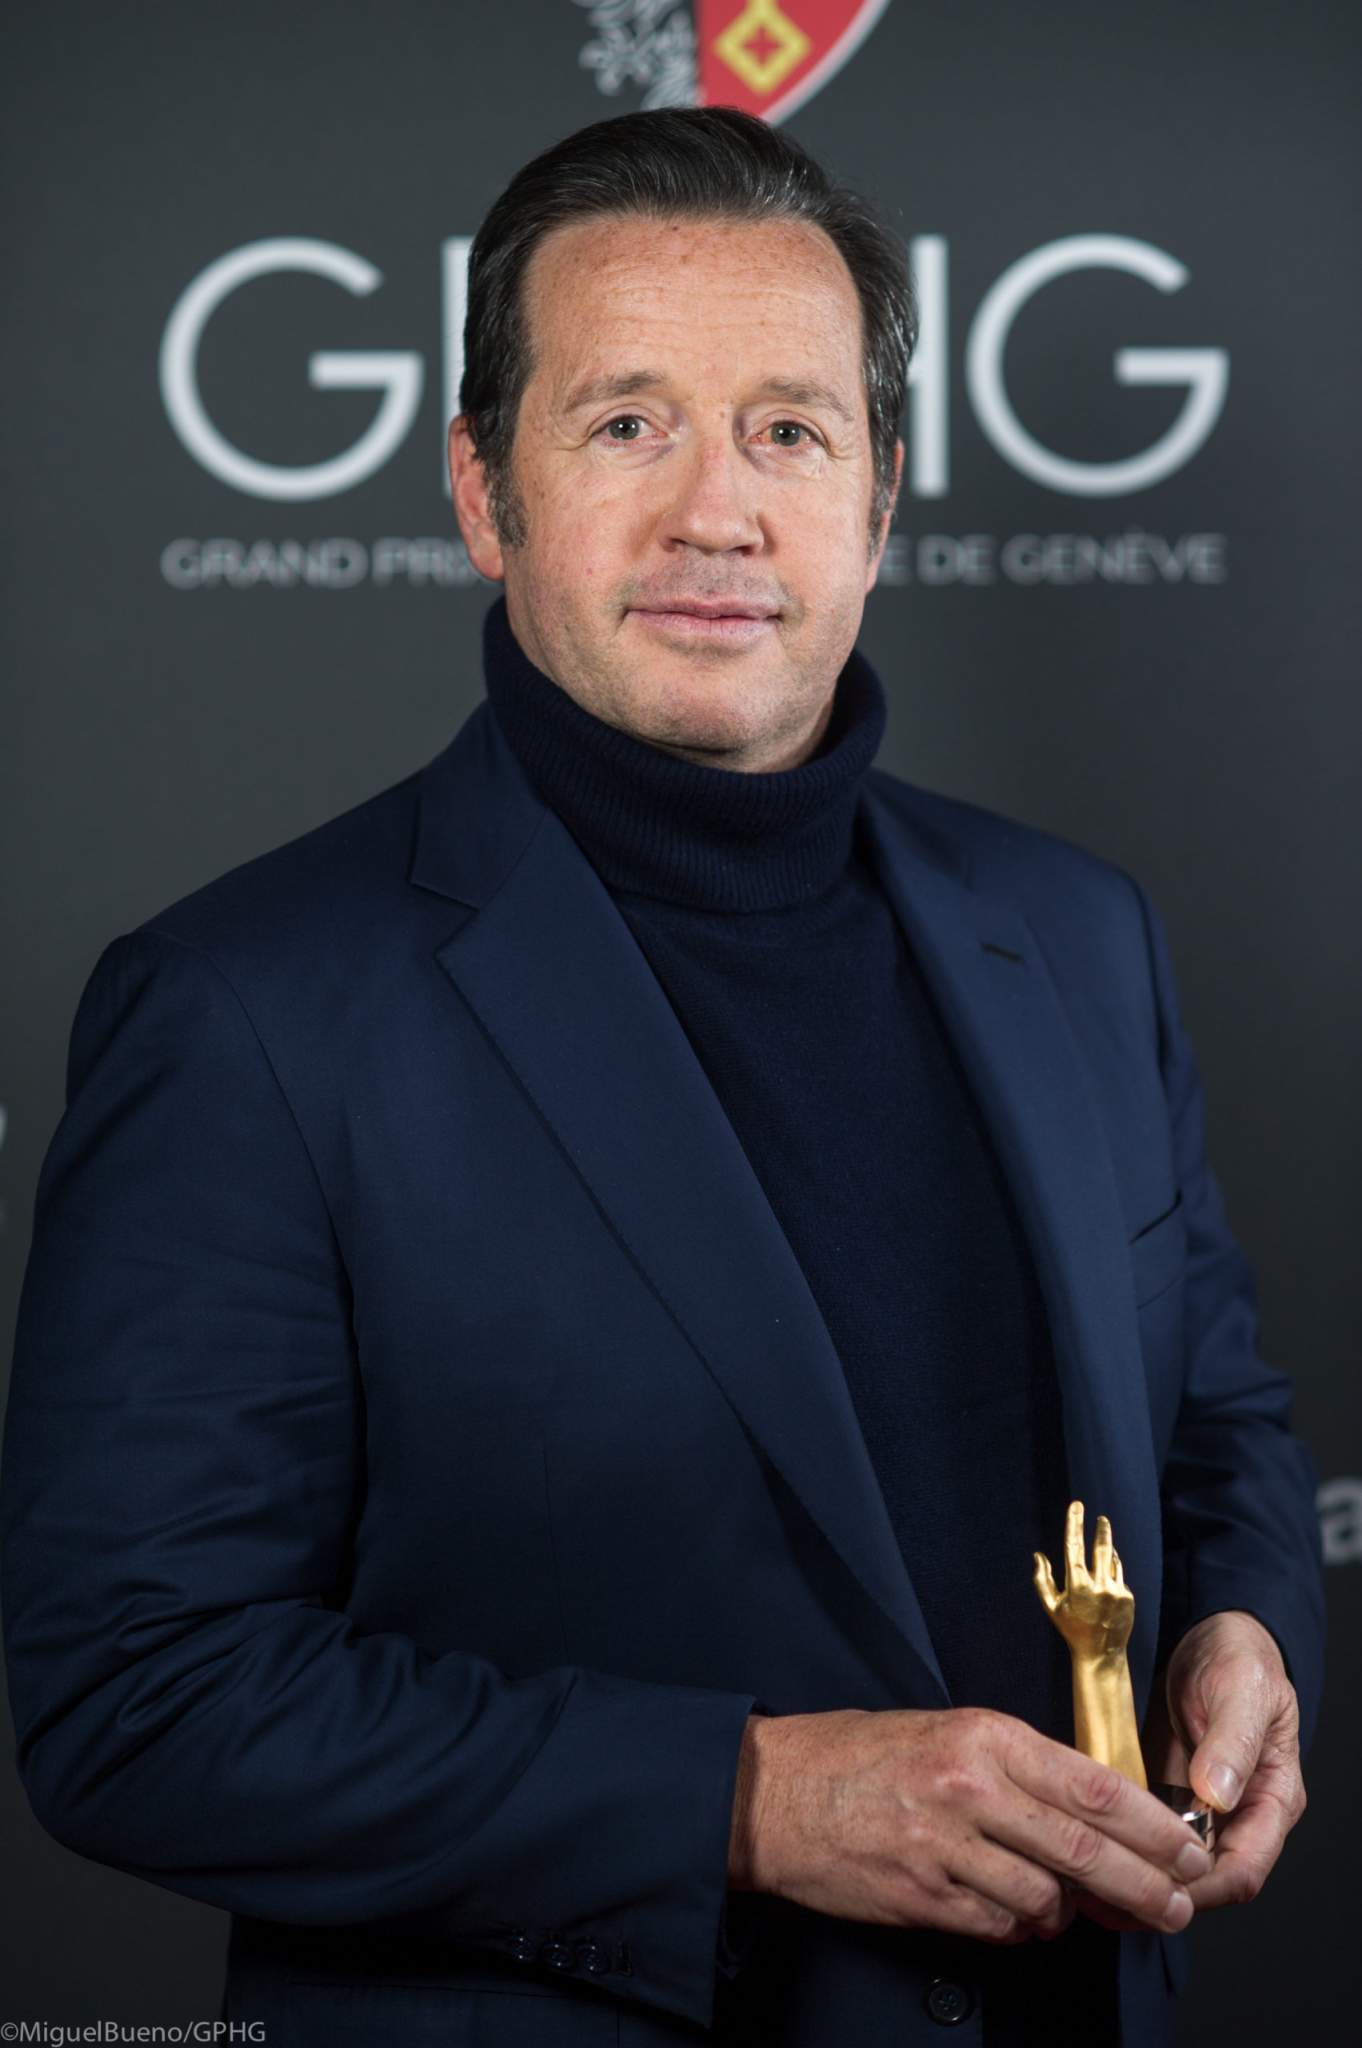 François-Henry Bennahmias, CEO of Audemars Piguet, winner of the Iconic Watch Prize 2021